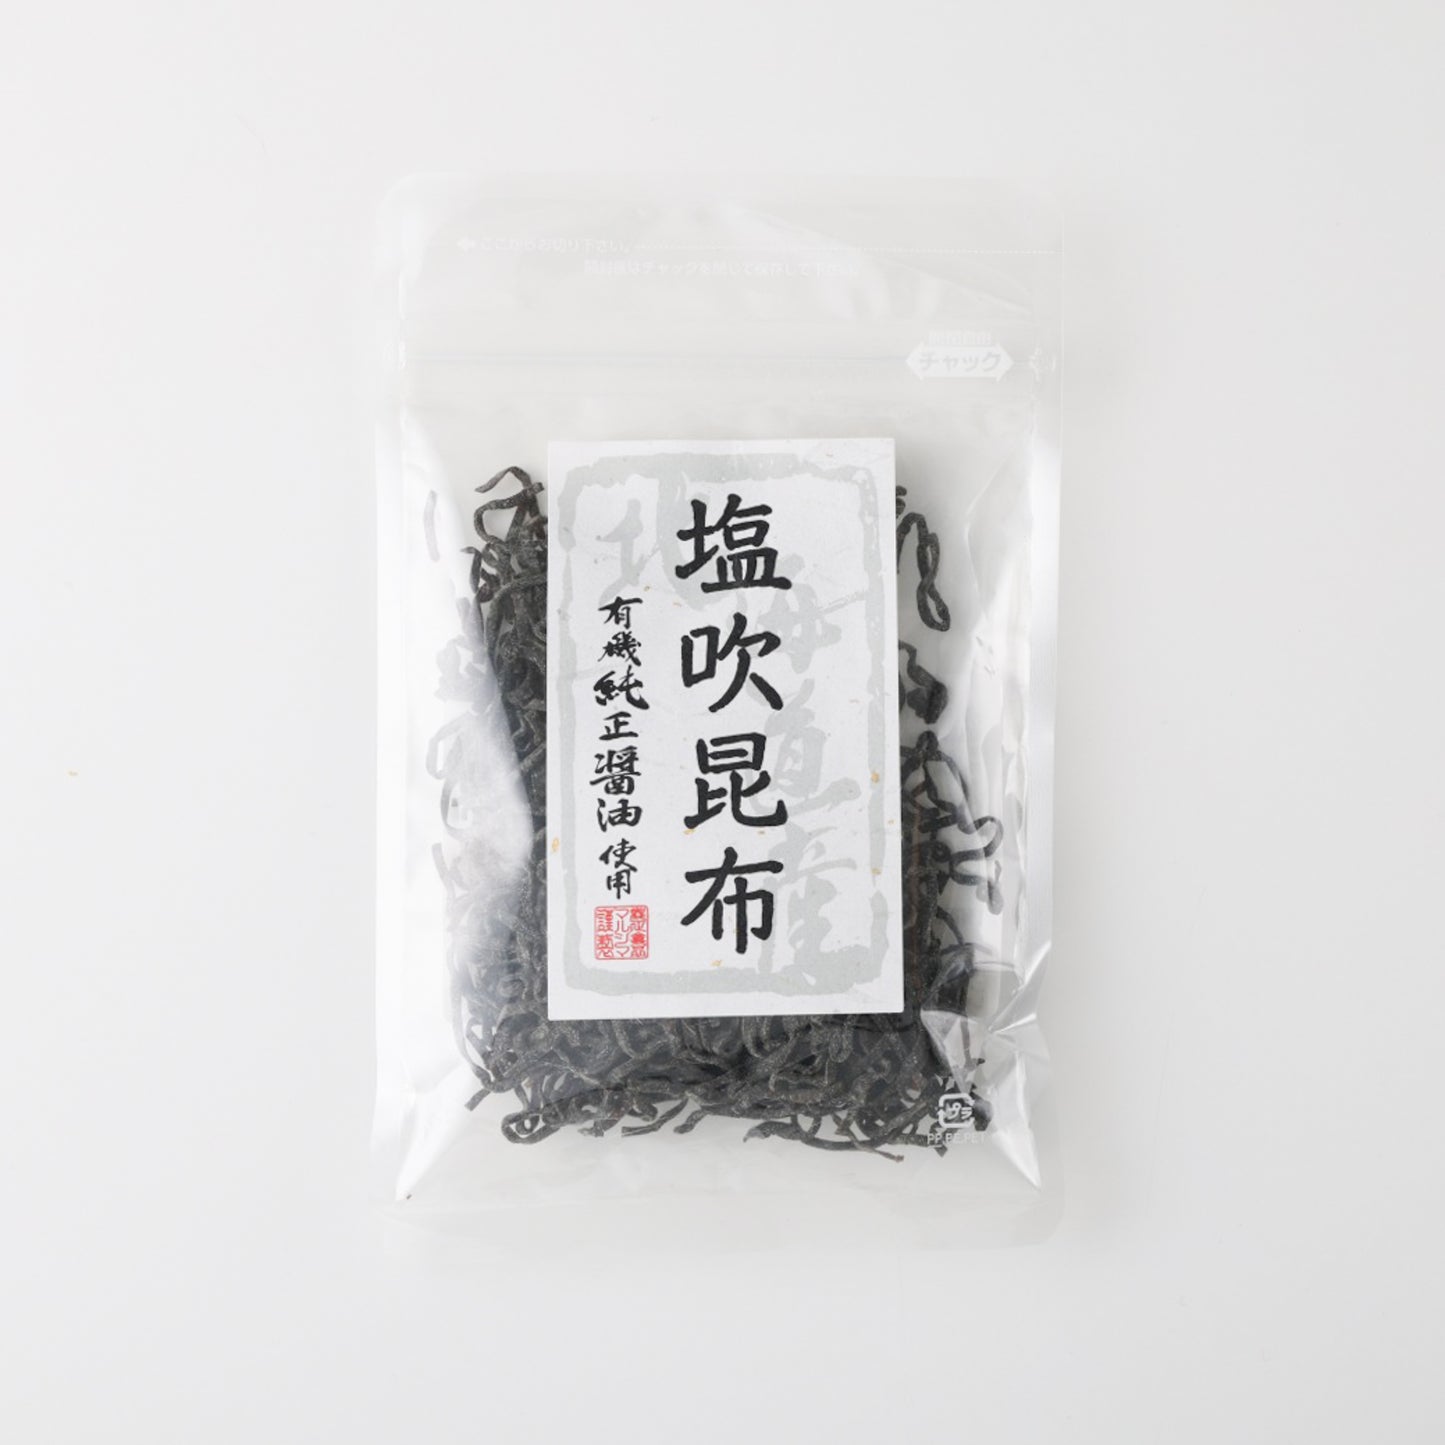 Shiofuki Konbu 
Made with Hokkaido seaweed